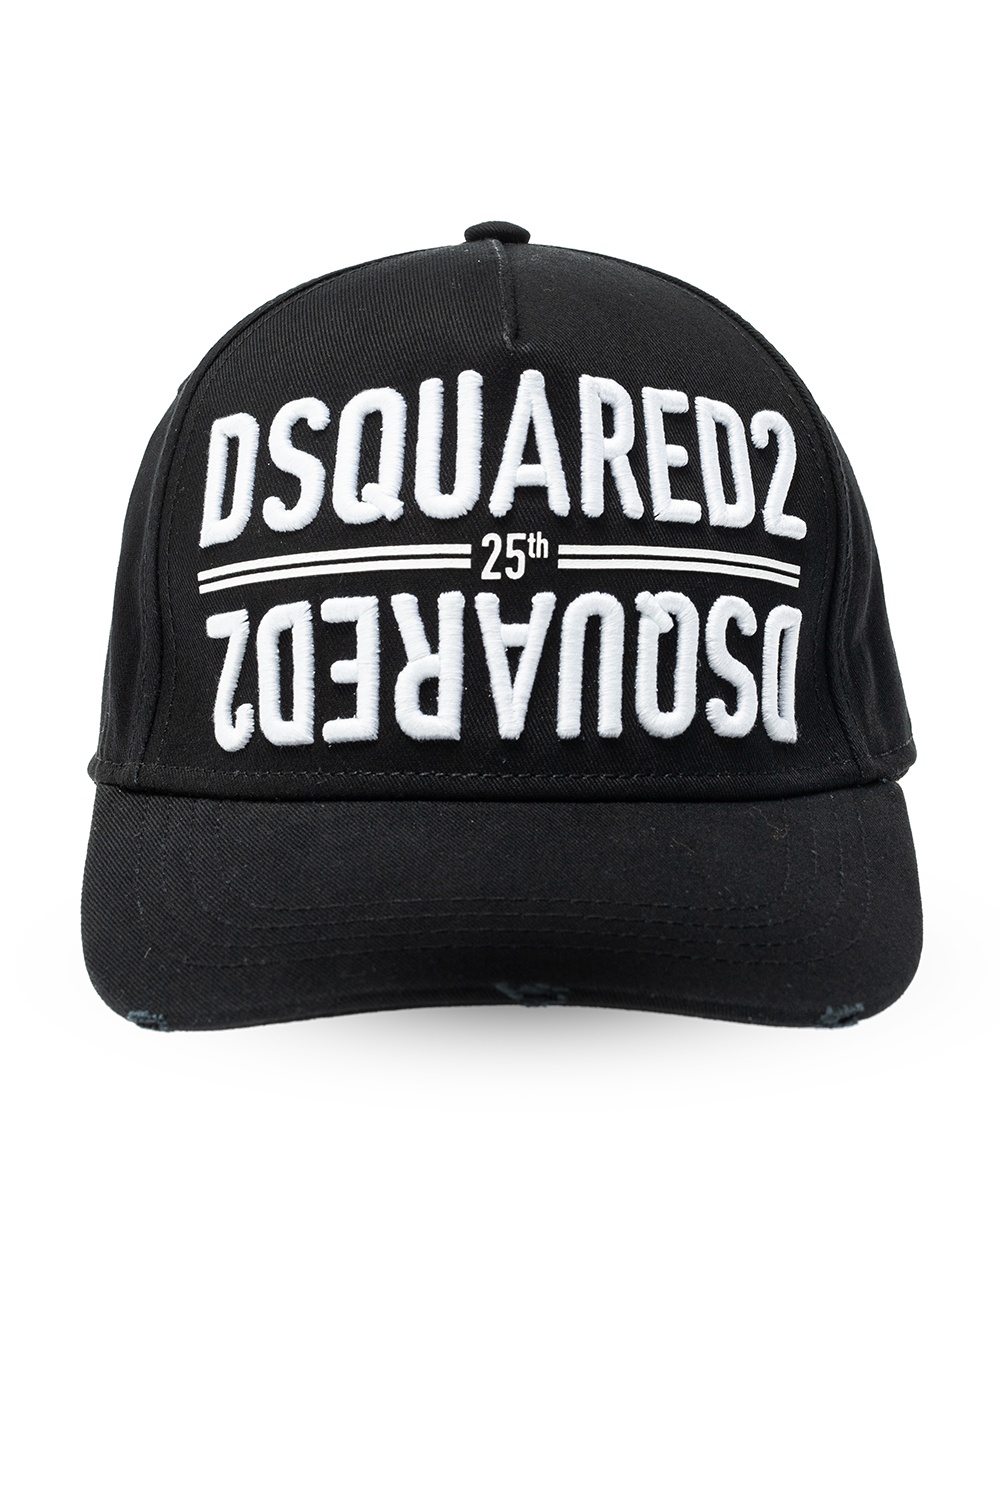 dsquared2 white cap